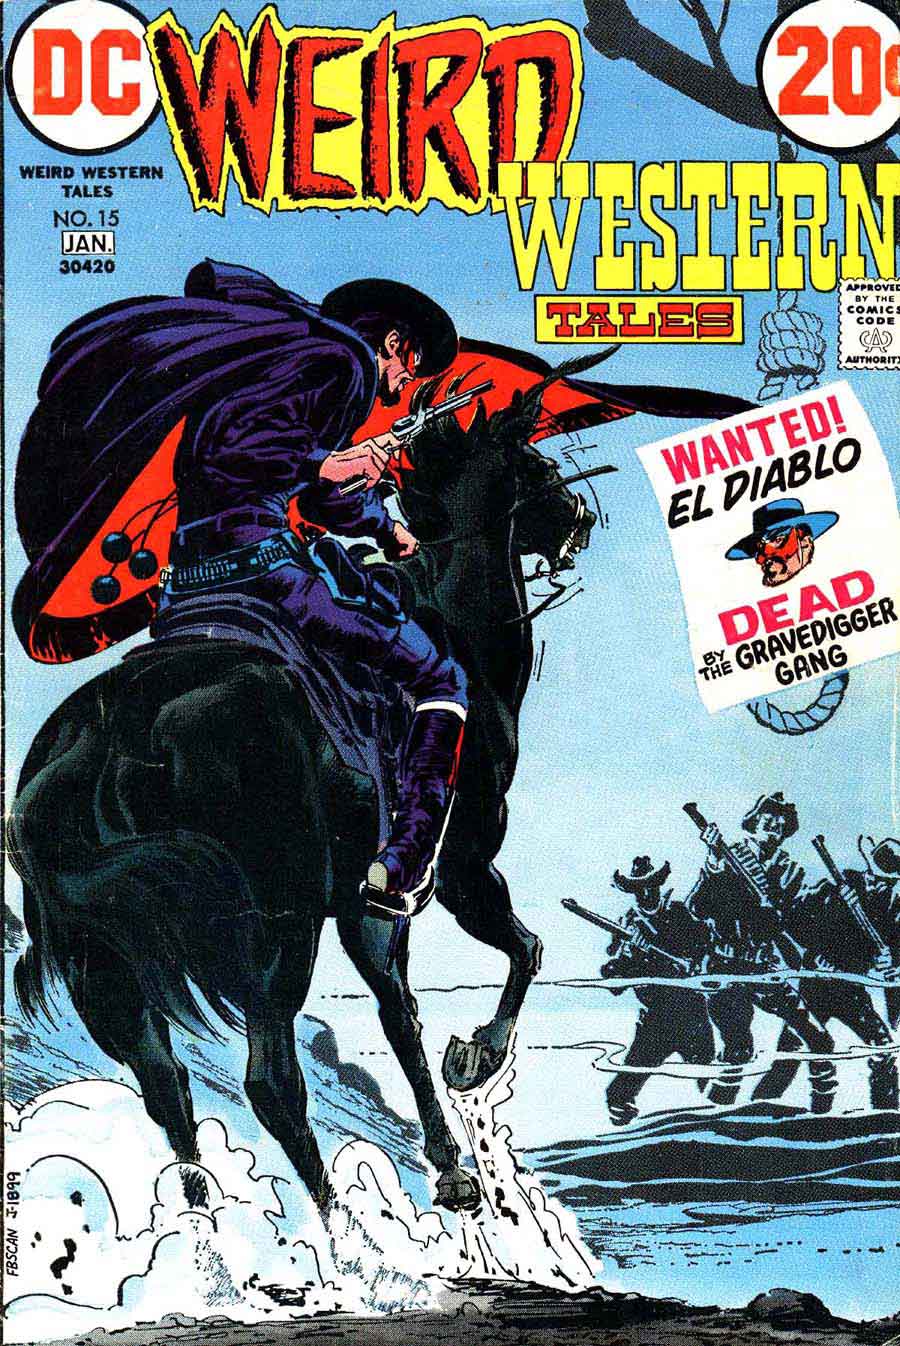 Weird Western Tales v1 #13 dc el diablo 1970s bronze age comic book cover art by Neal Adams